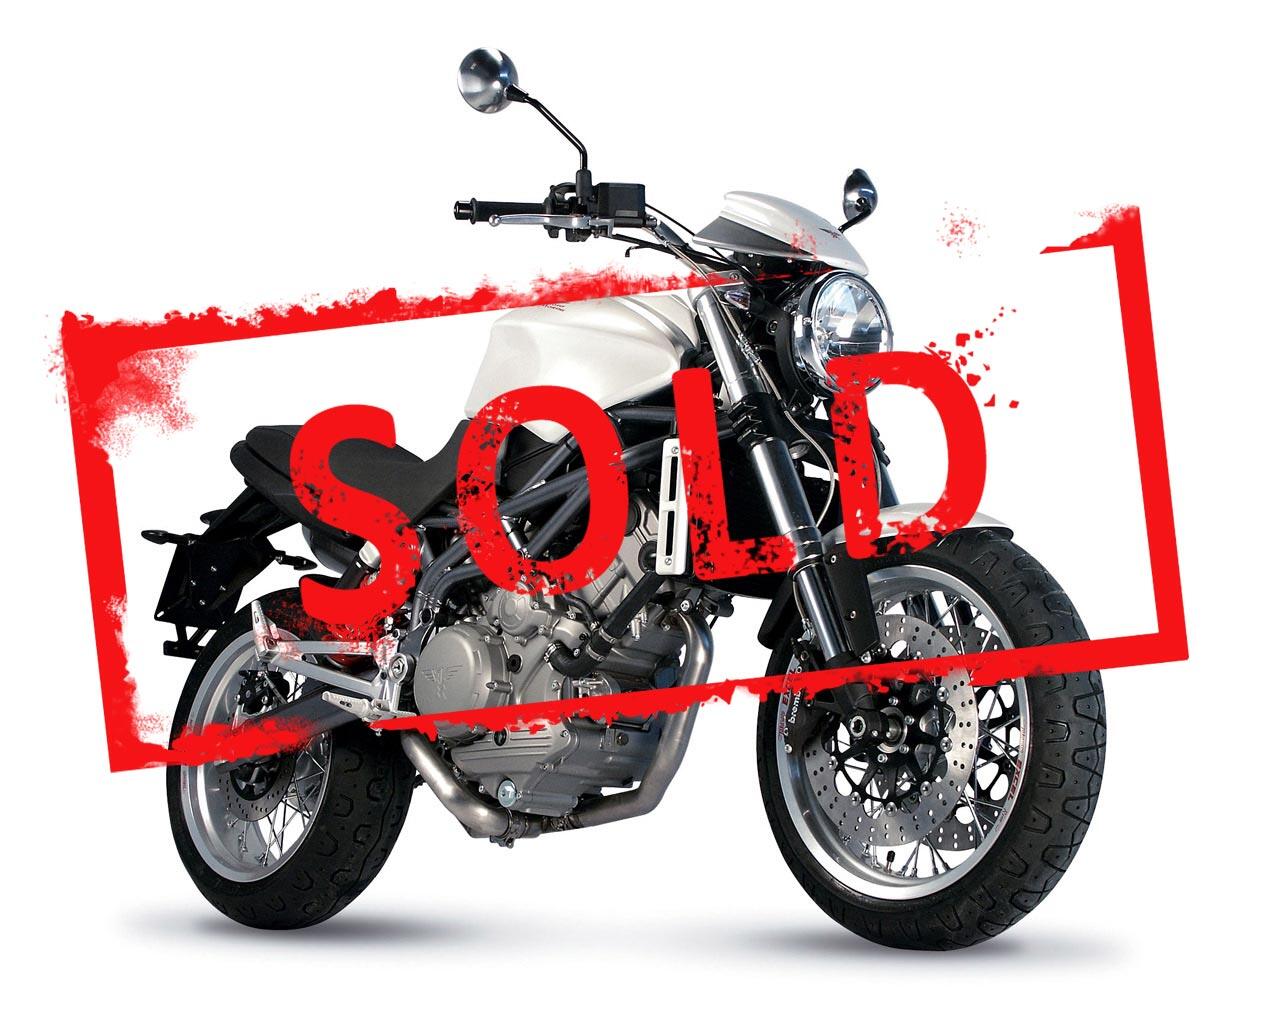 Terjual Jual Motor Cina Jianshe 125 Cc Model Harley Davidson